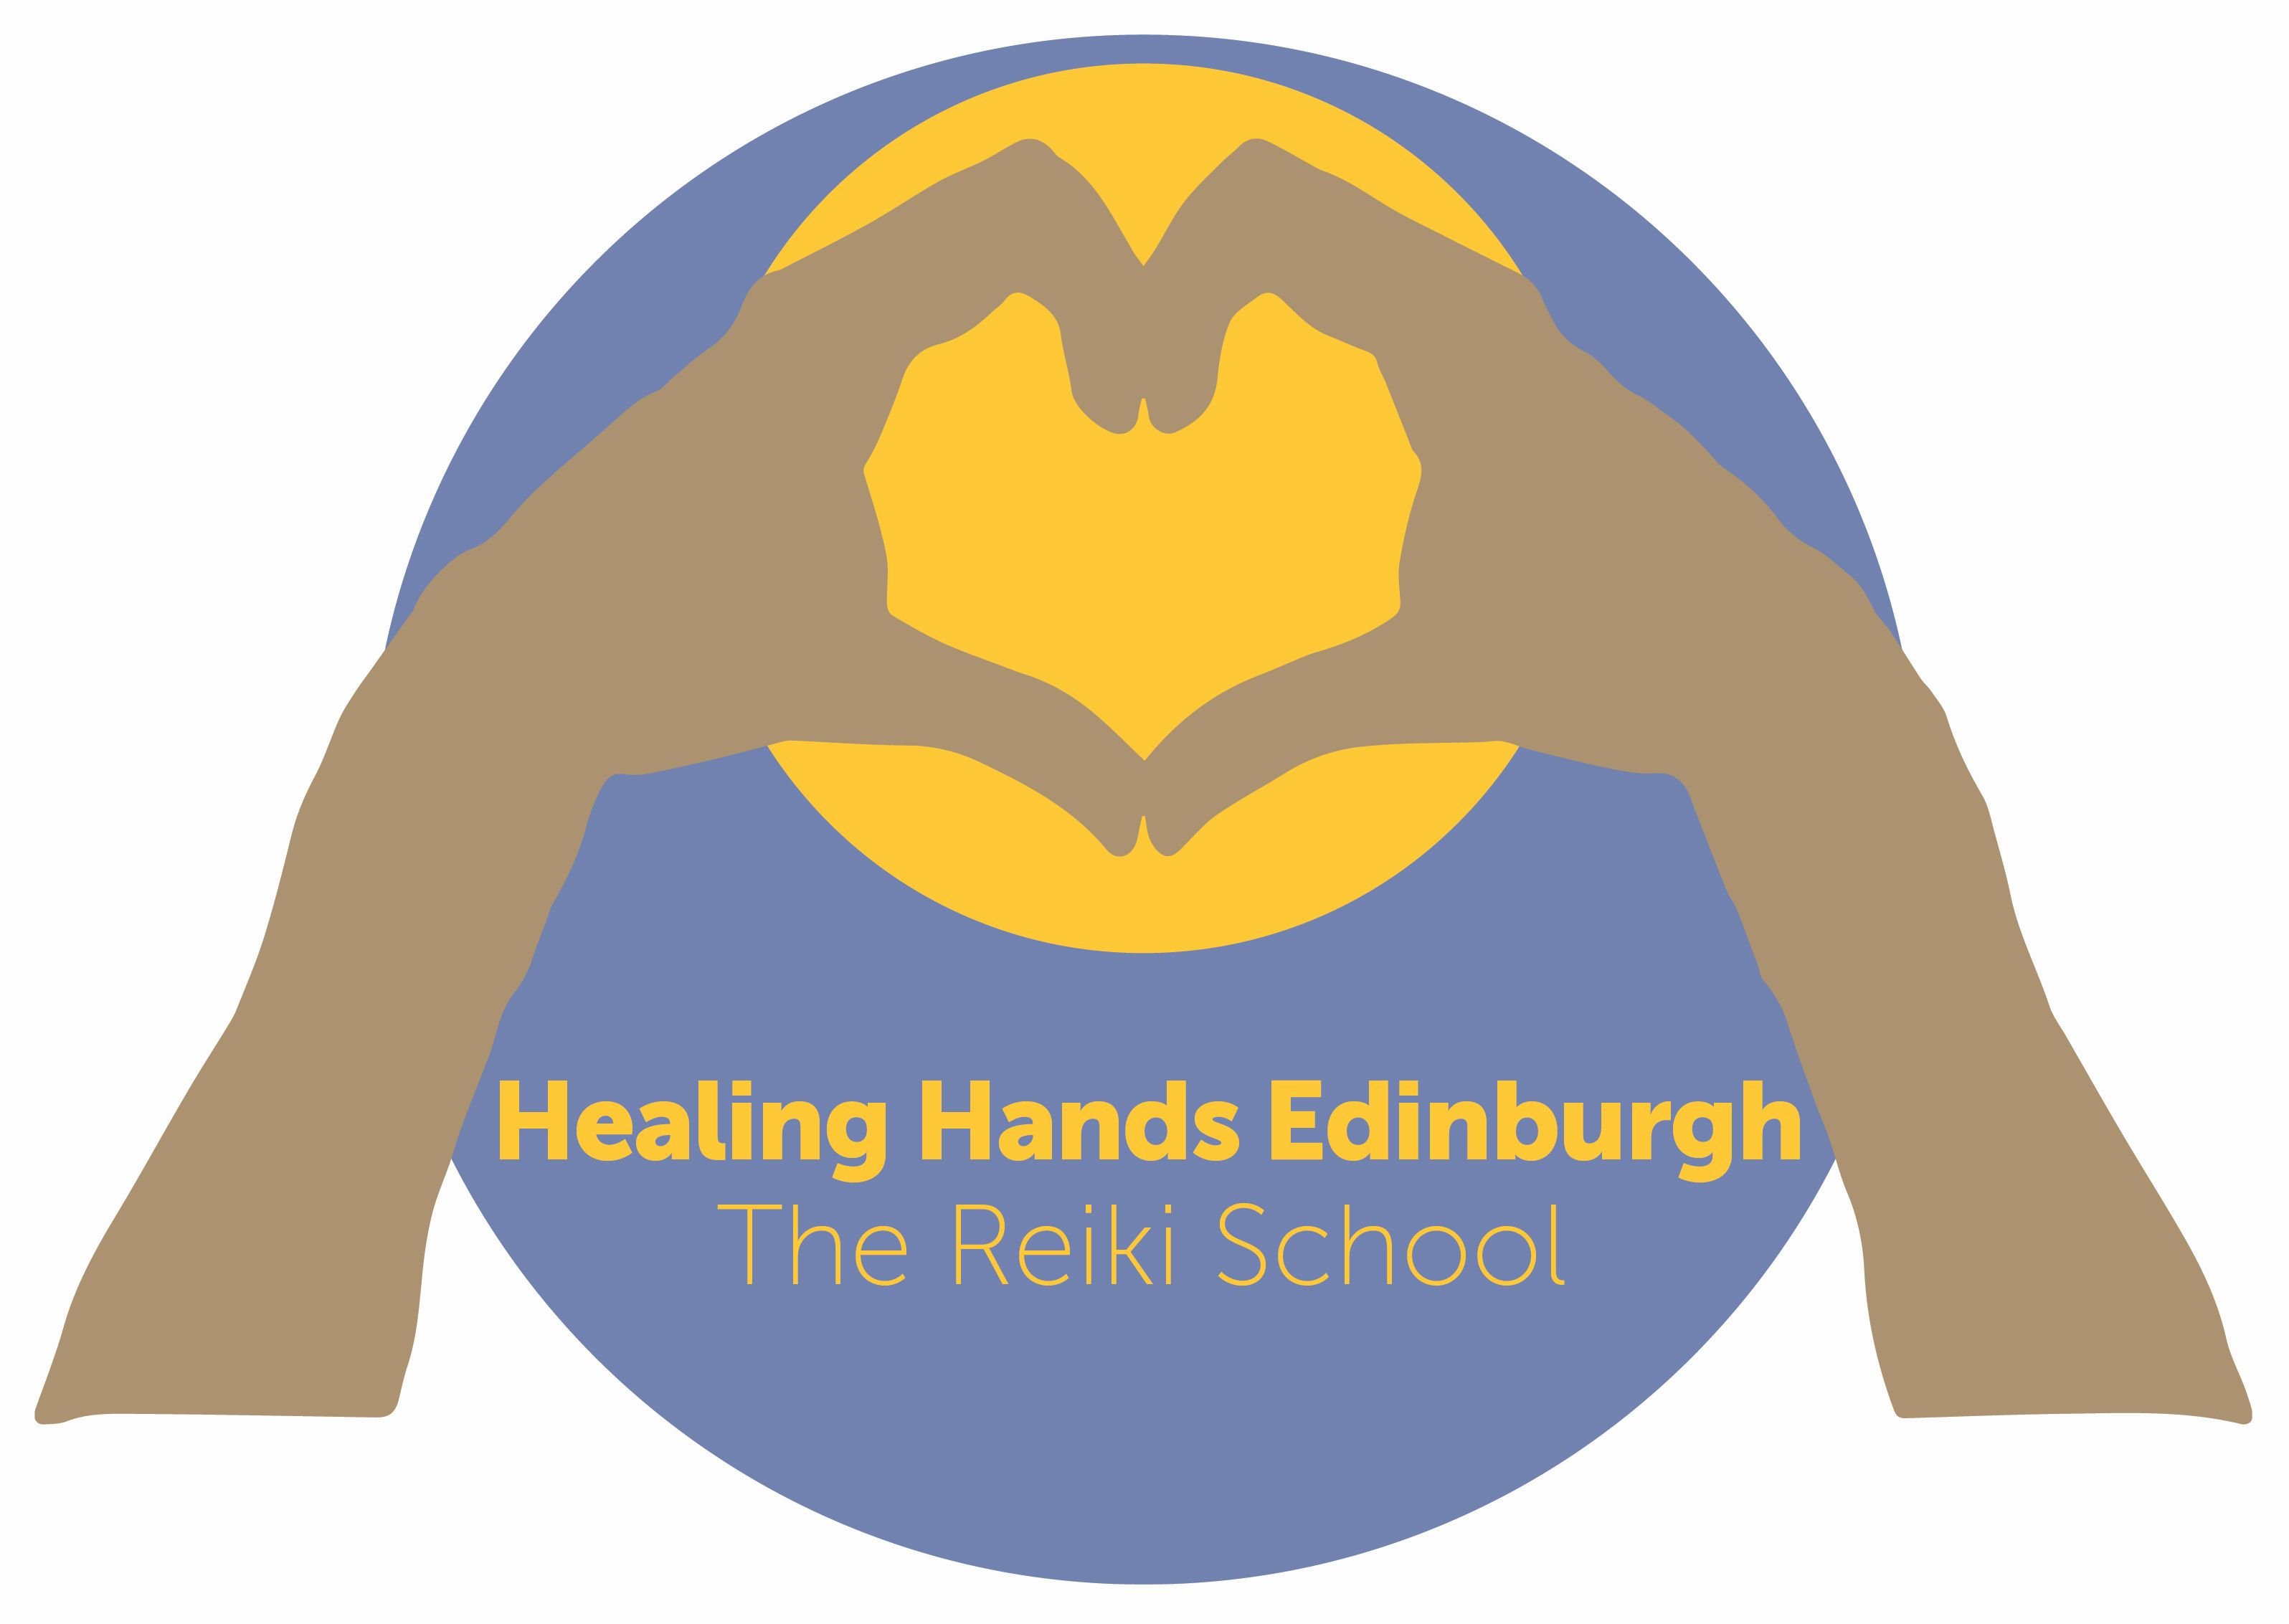 Healing Hands Edinburgh The Reiki School logo